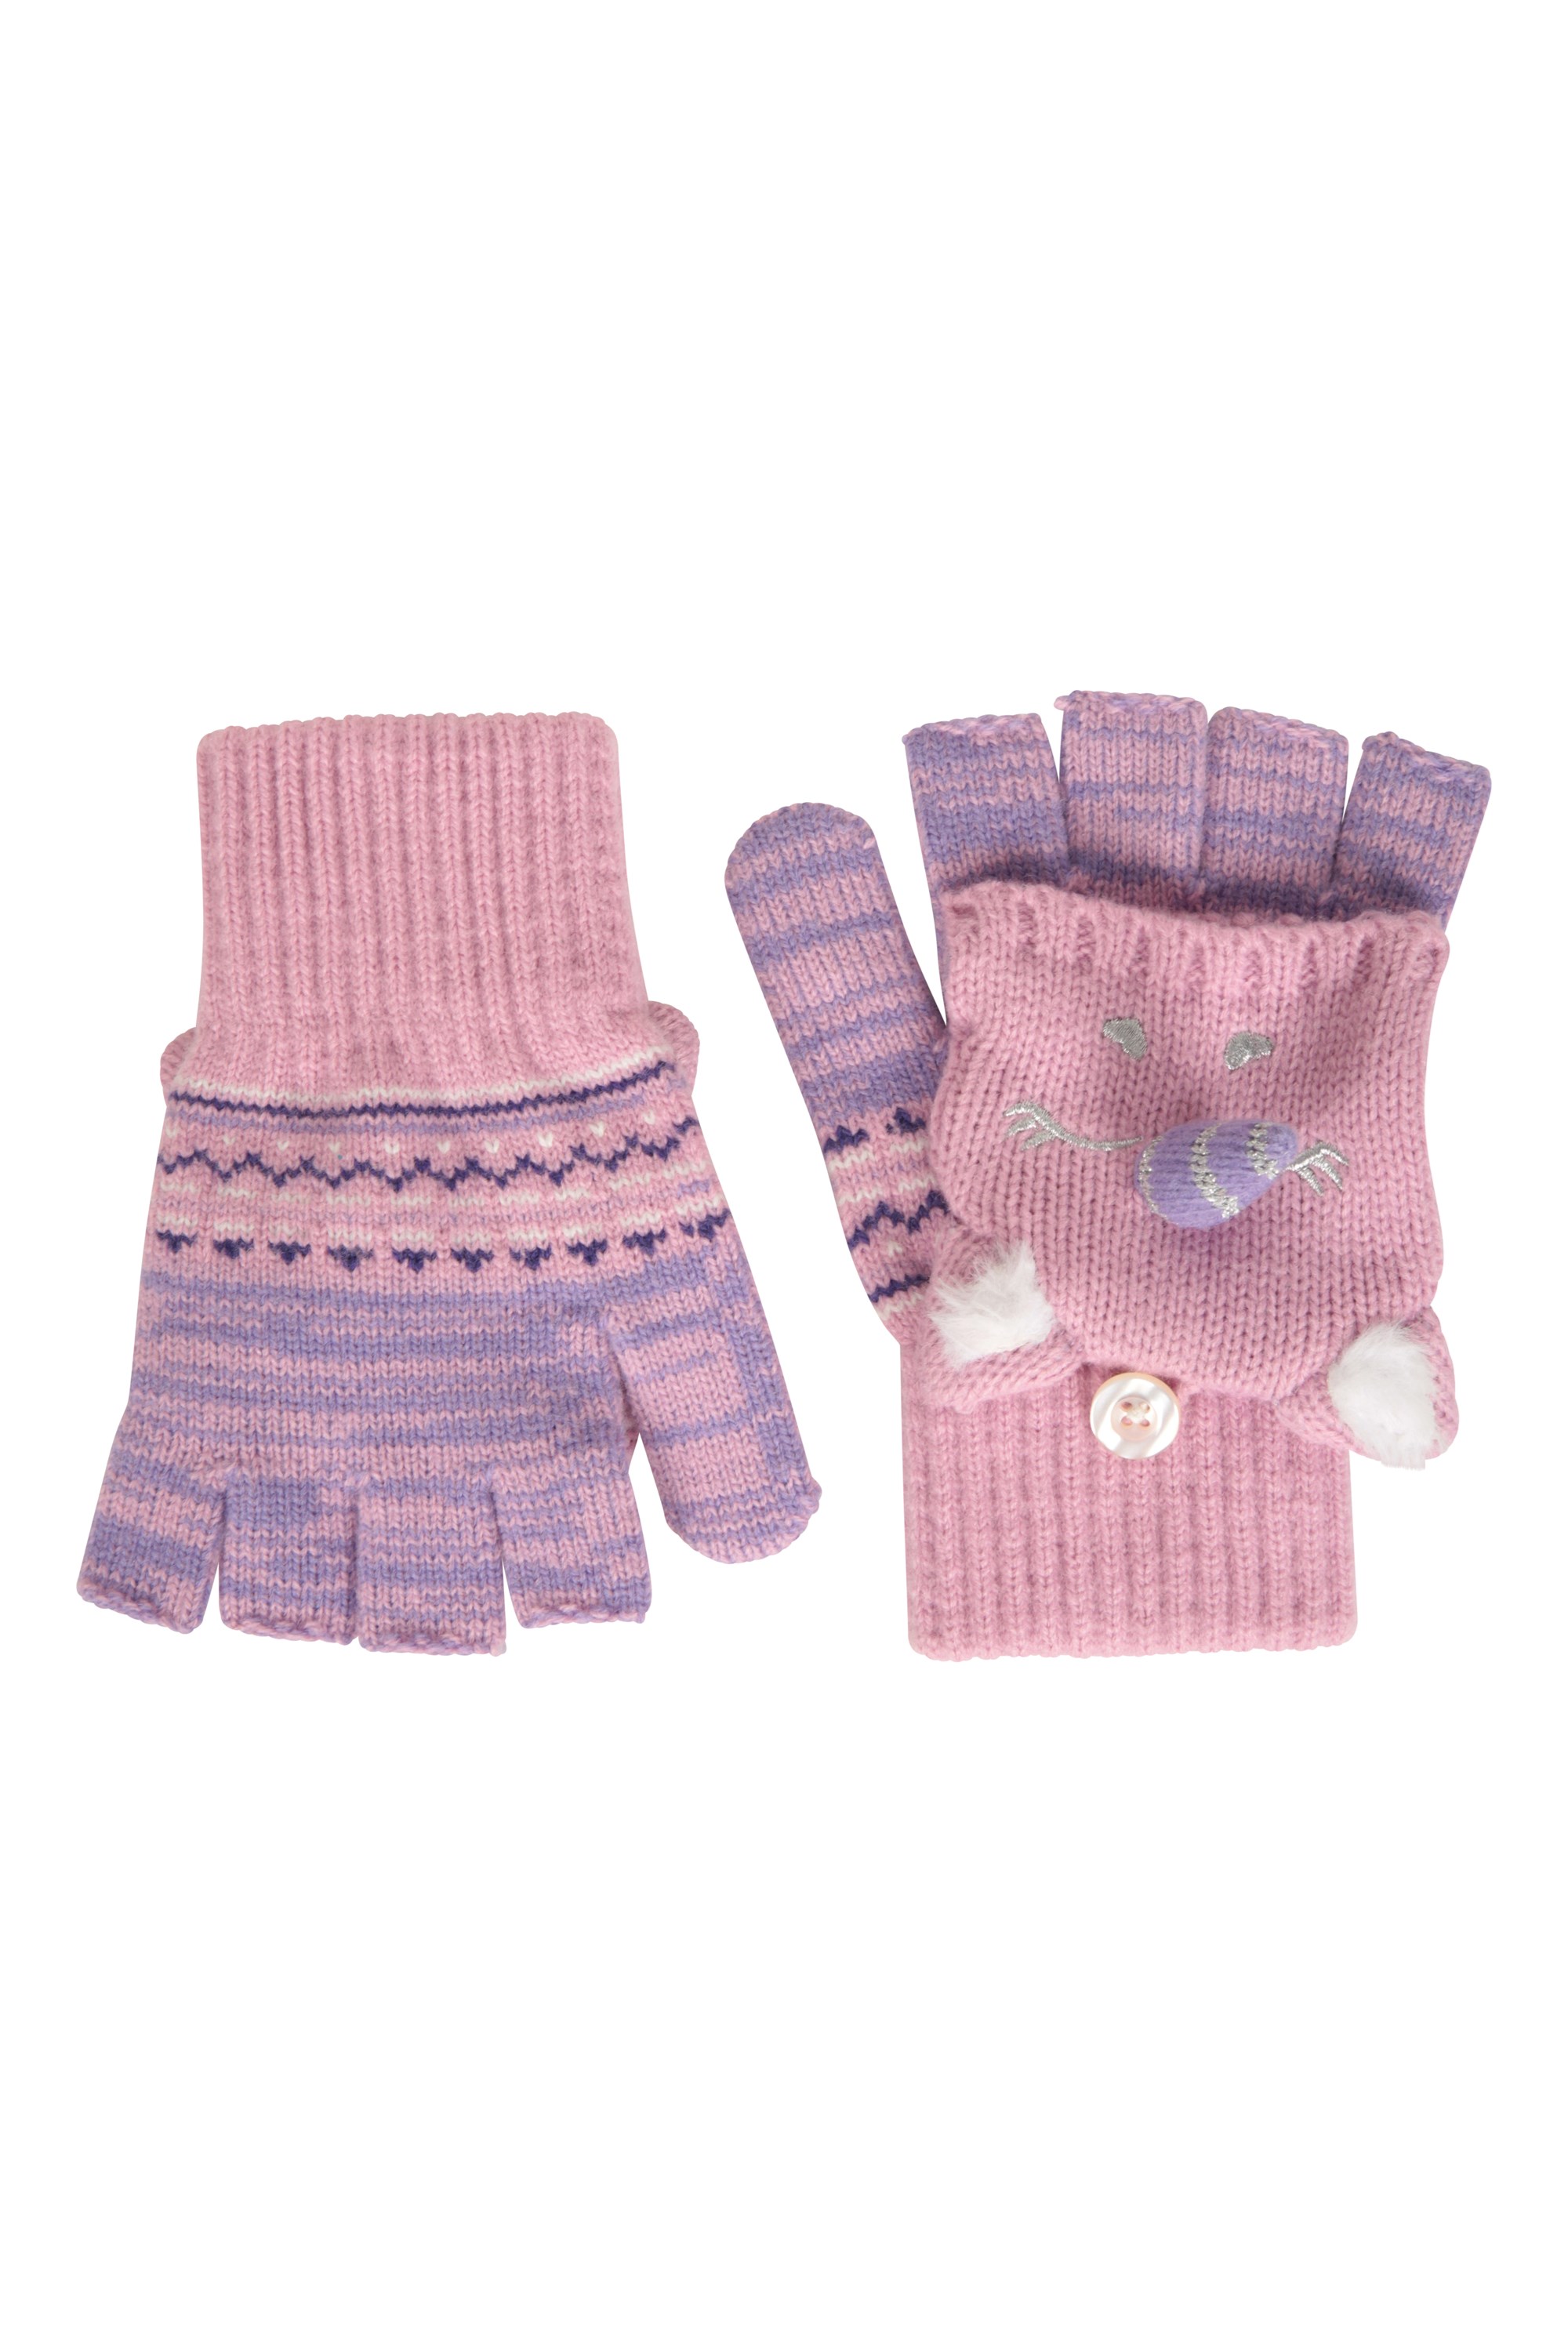 Unicorn Kids Knitted Gloves